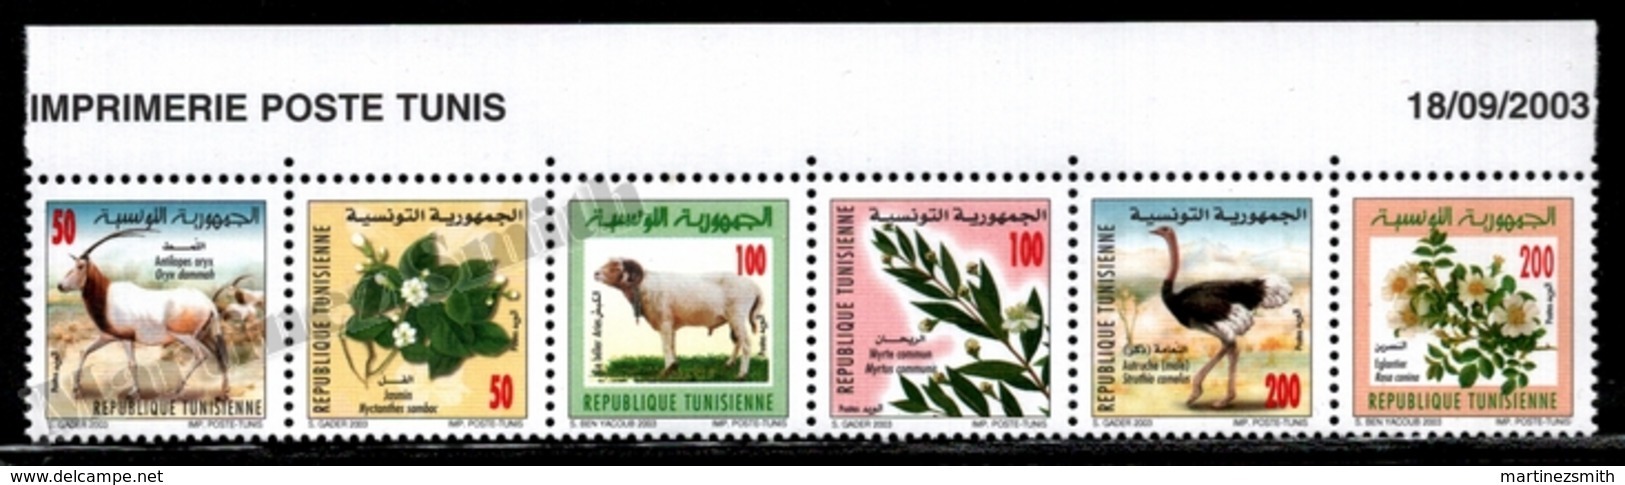 Tunisia - Tunisie 2003 Yvert 1495-1500, Flora. Fauna. Assorted Plants & Animals - Strip W Border - MNH - Tunisia (1956-...)